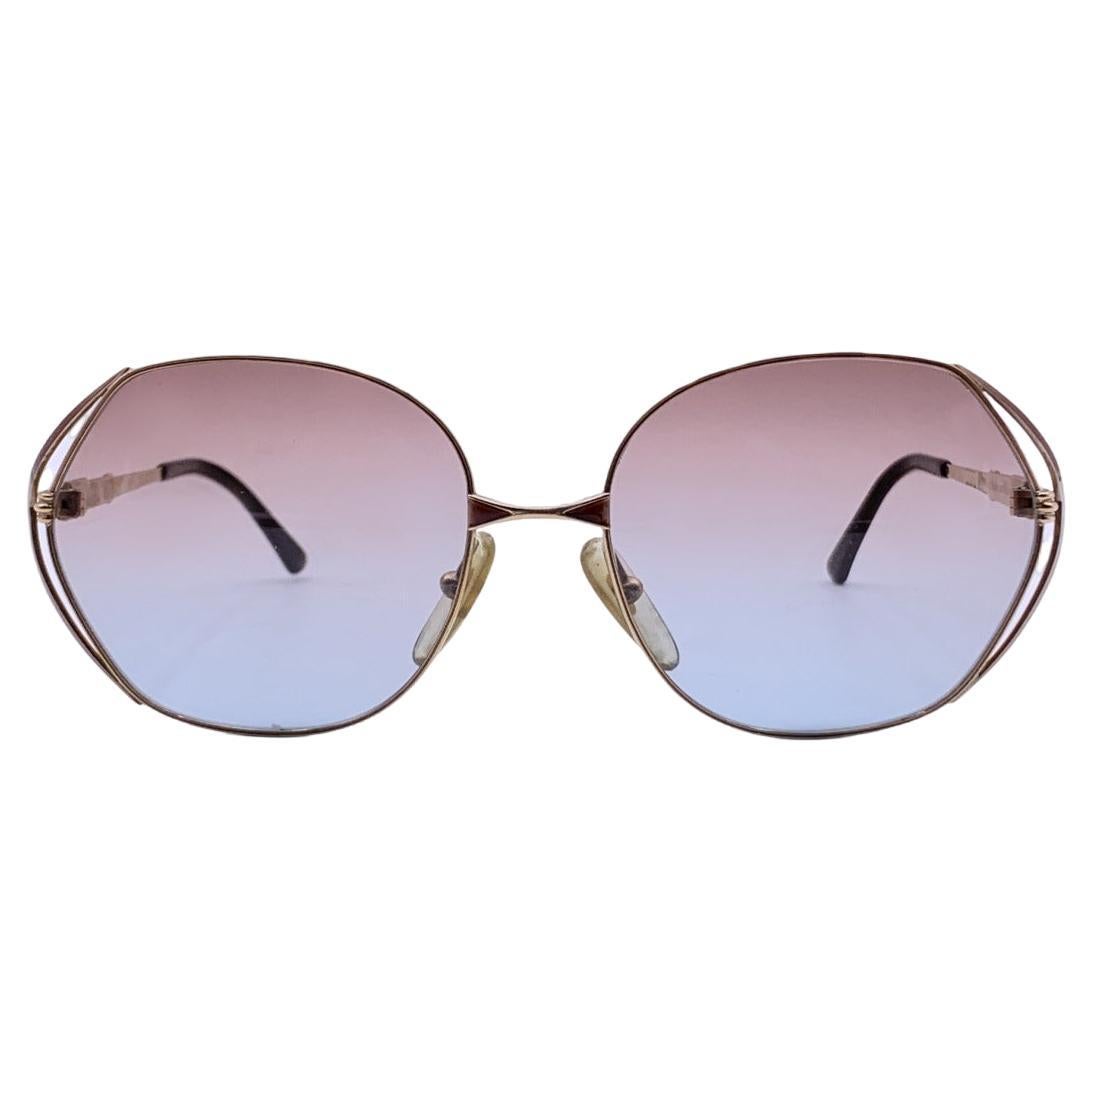 Christian Dior Vintage Women Oversized Sunglasses 2302 41 56/17 125mm For Sale